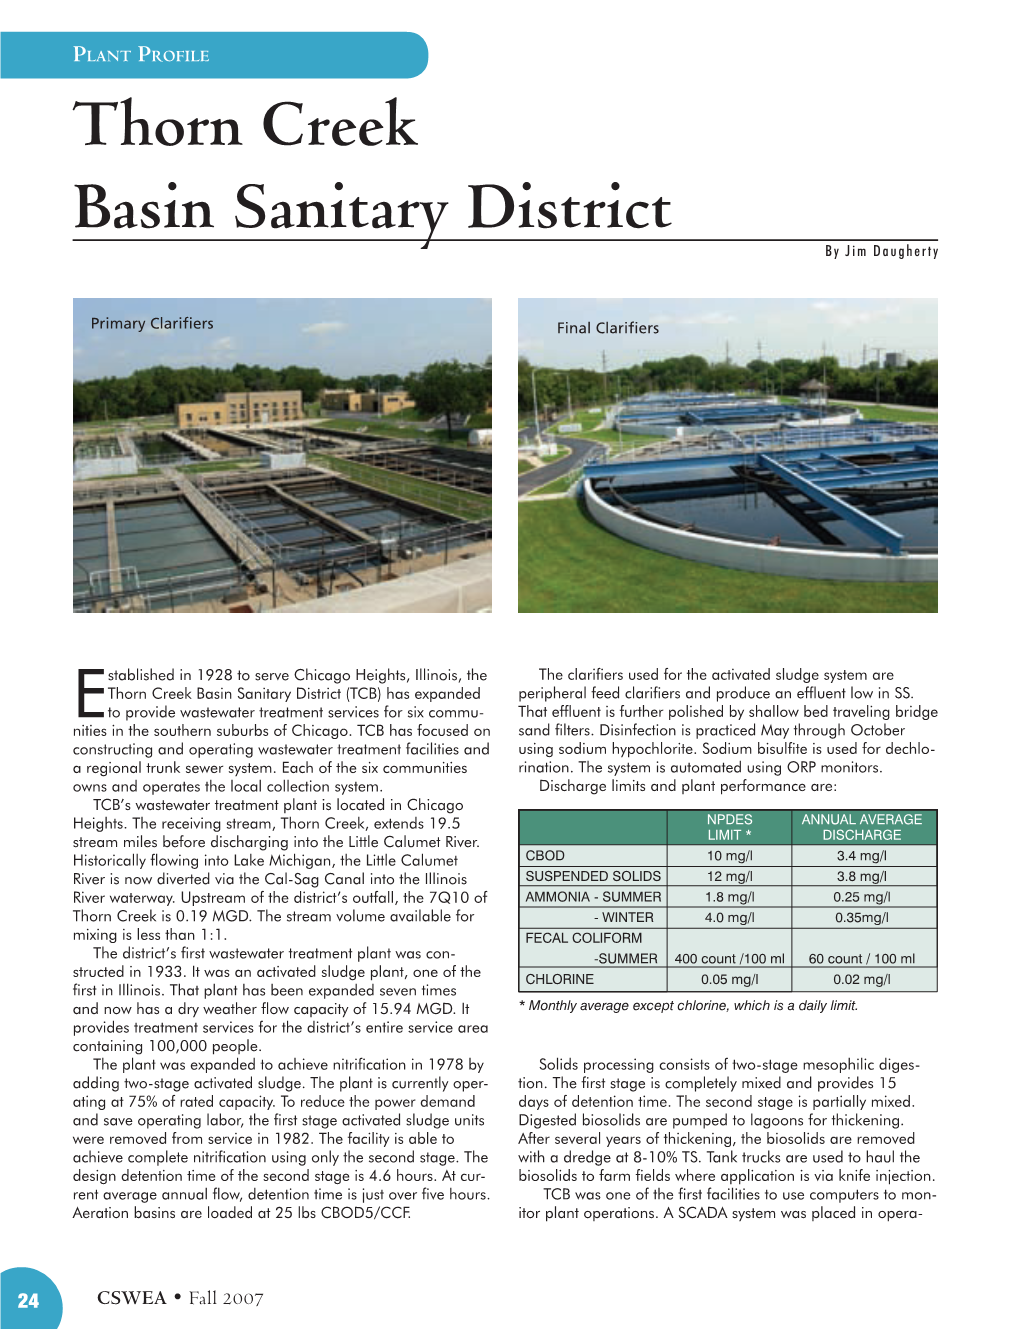 Thorn Creek Basin Sanitary District by Jim Daugherty